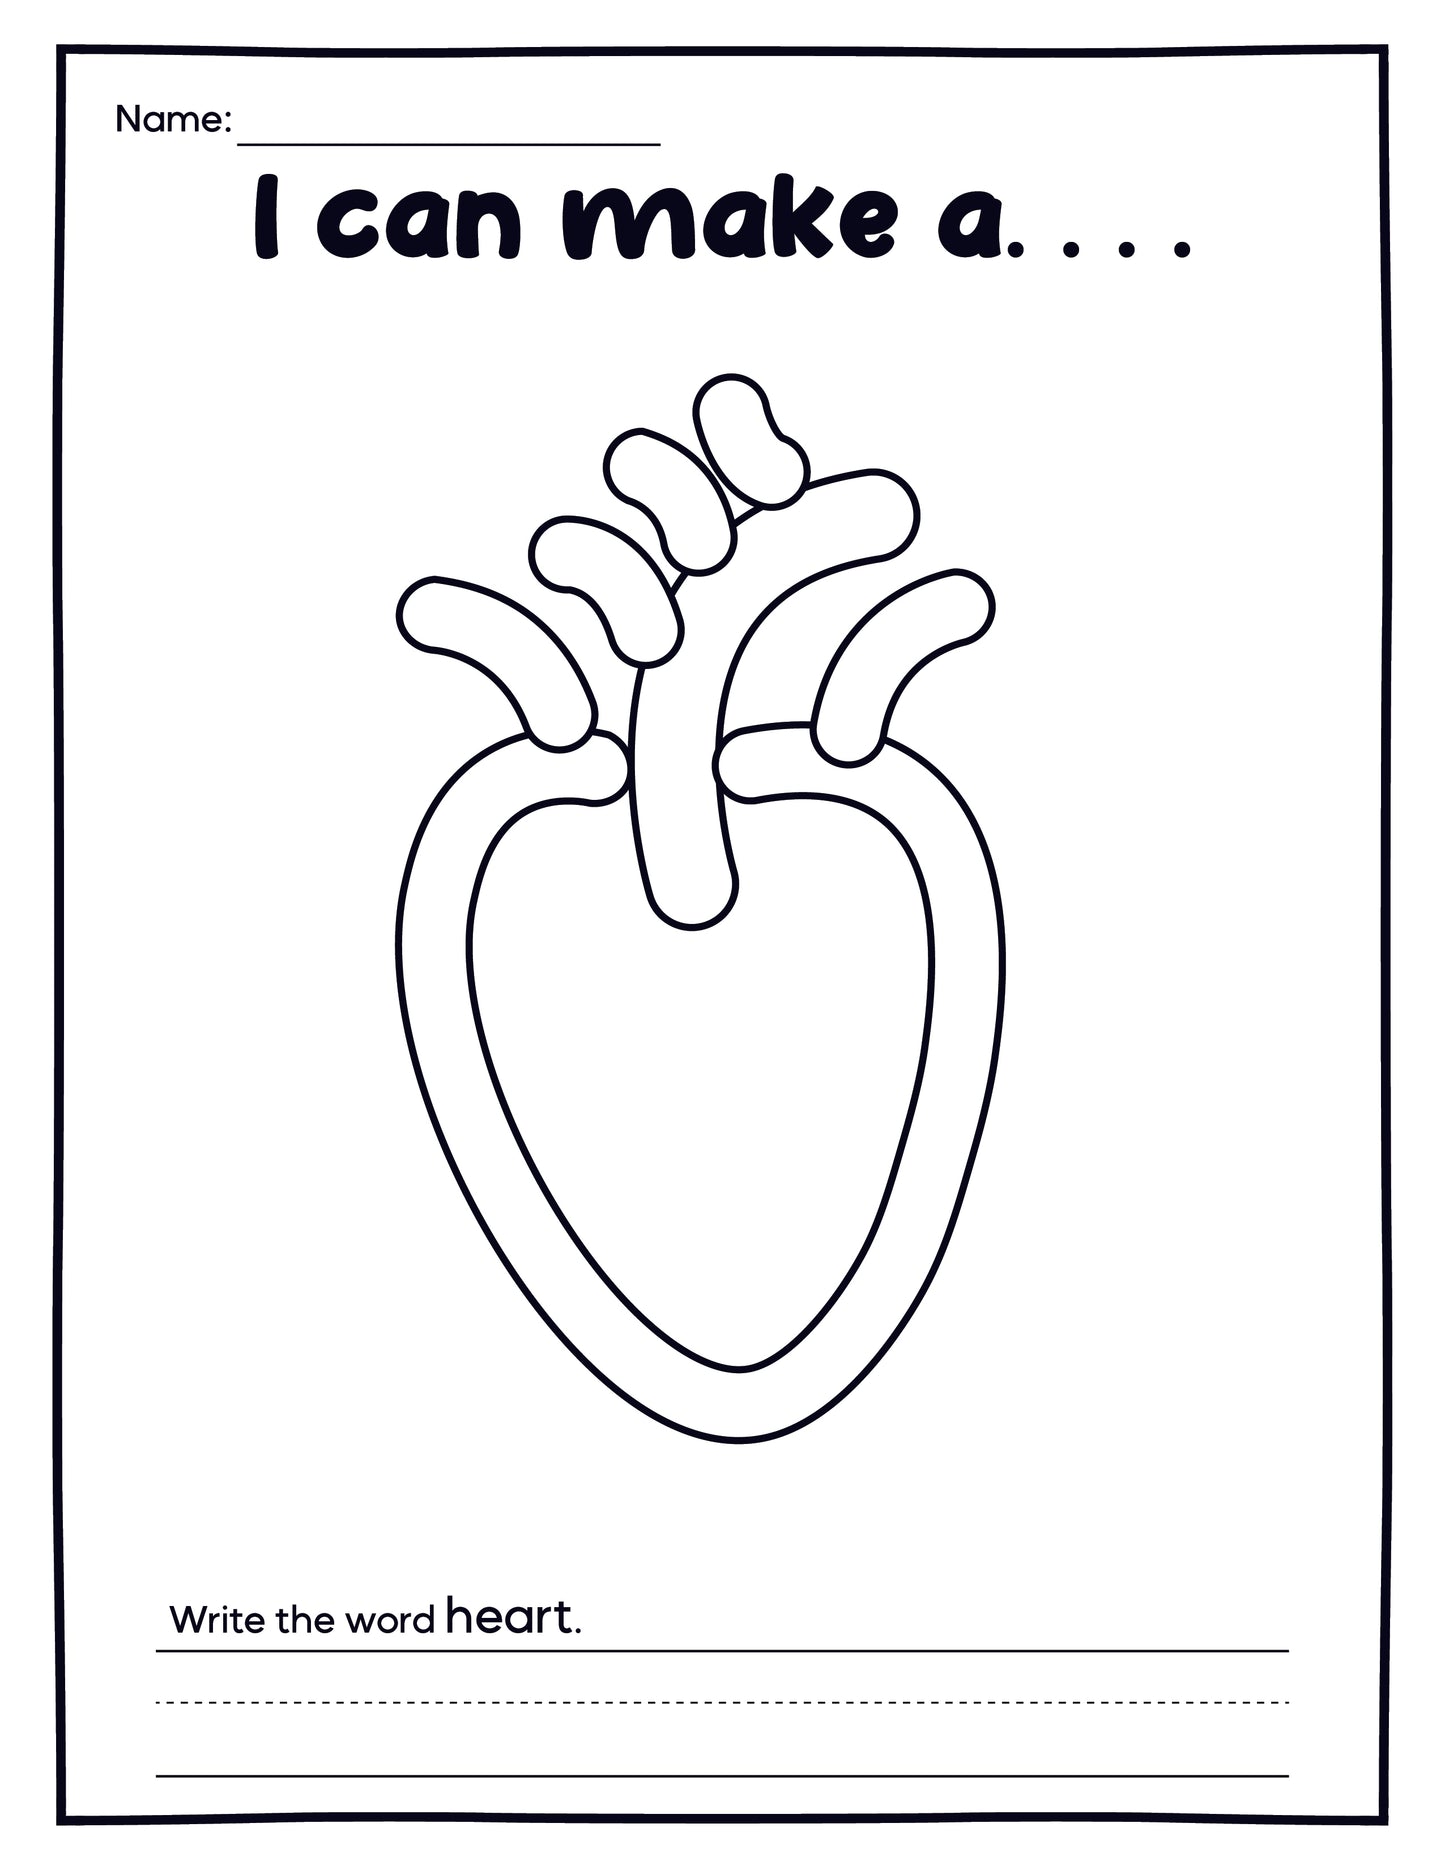 Human Organs Playdough Mats (16 Pages total)